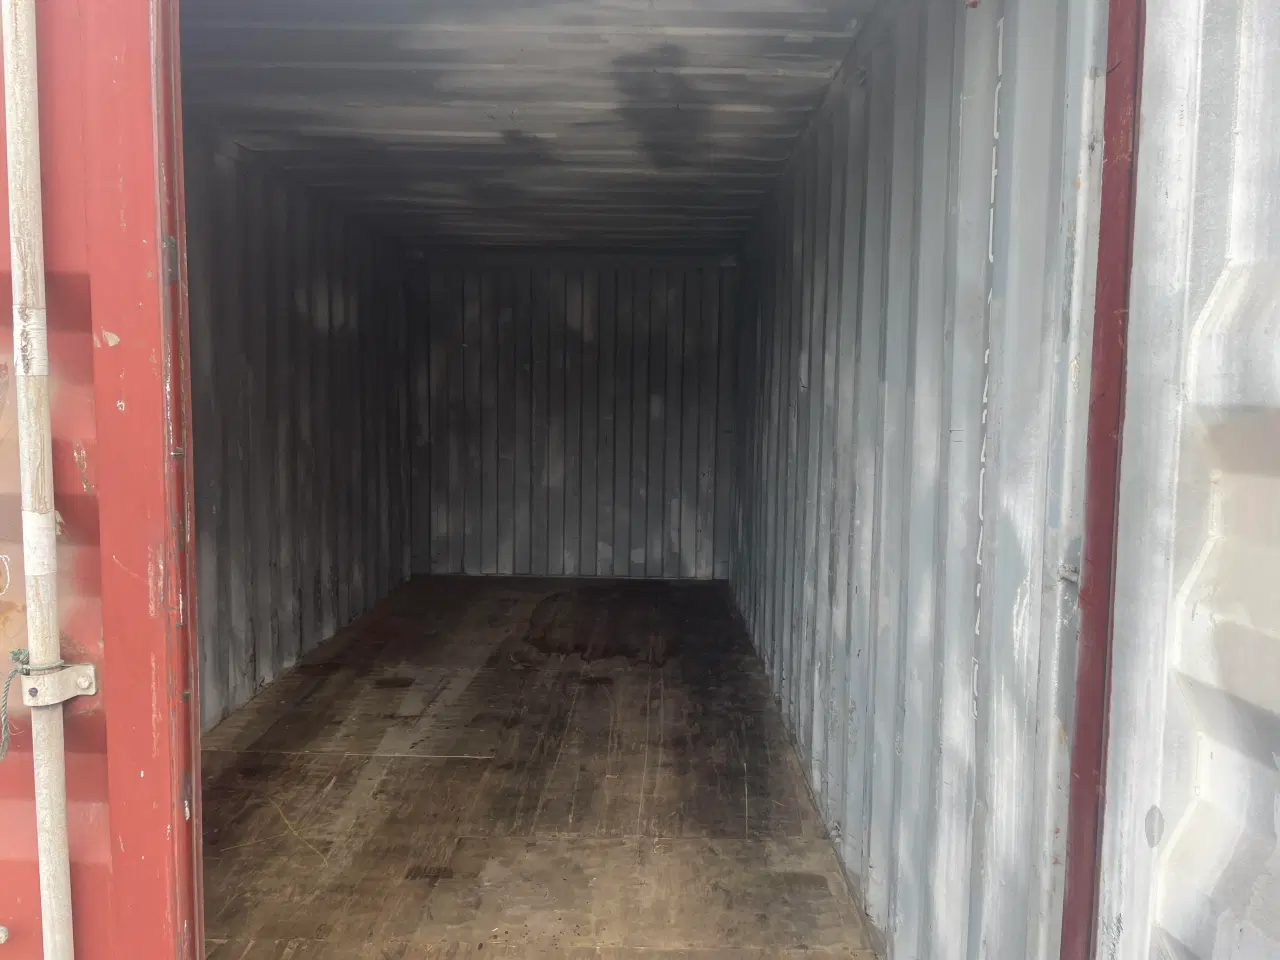 Billede 2 - 20 fods Container- ID: TGHU 122042-9